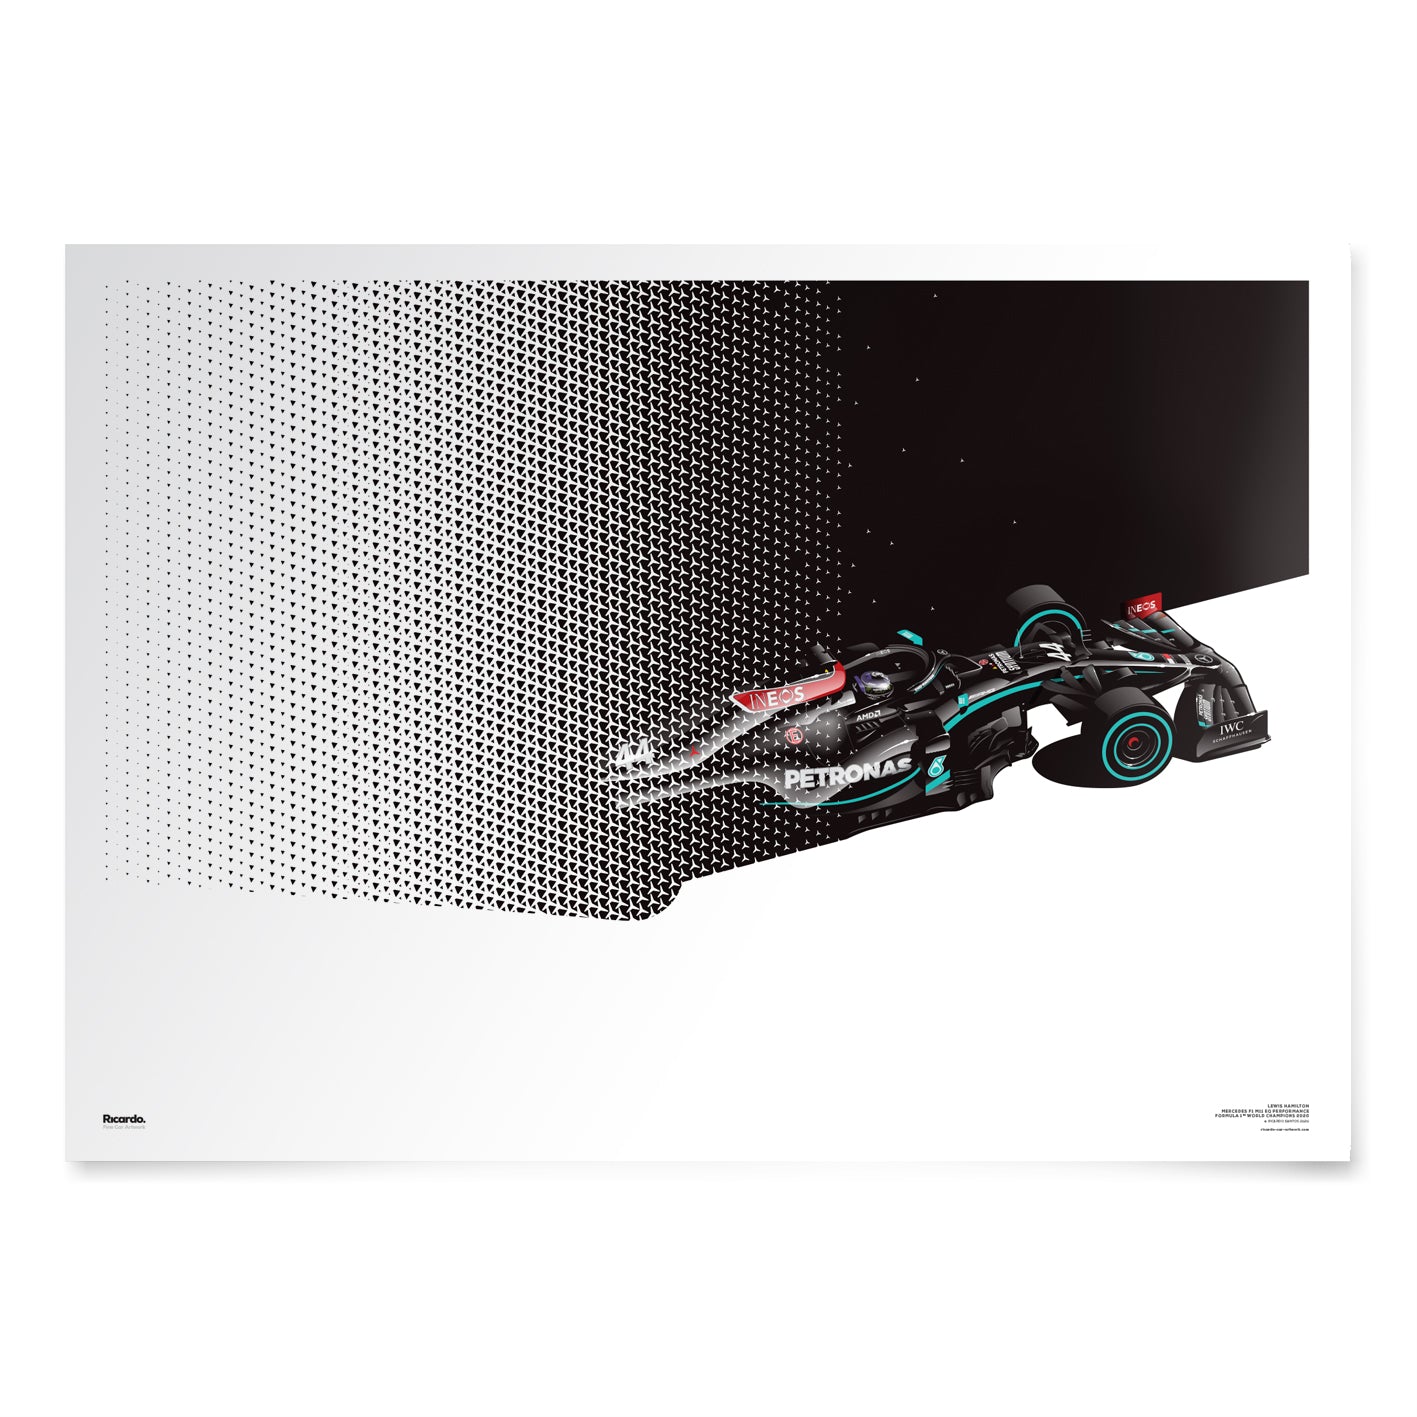 Lewis Hamilton Champion - Lewis Hamilton - Posters and Art Prints